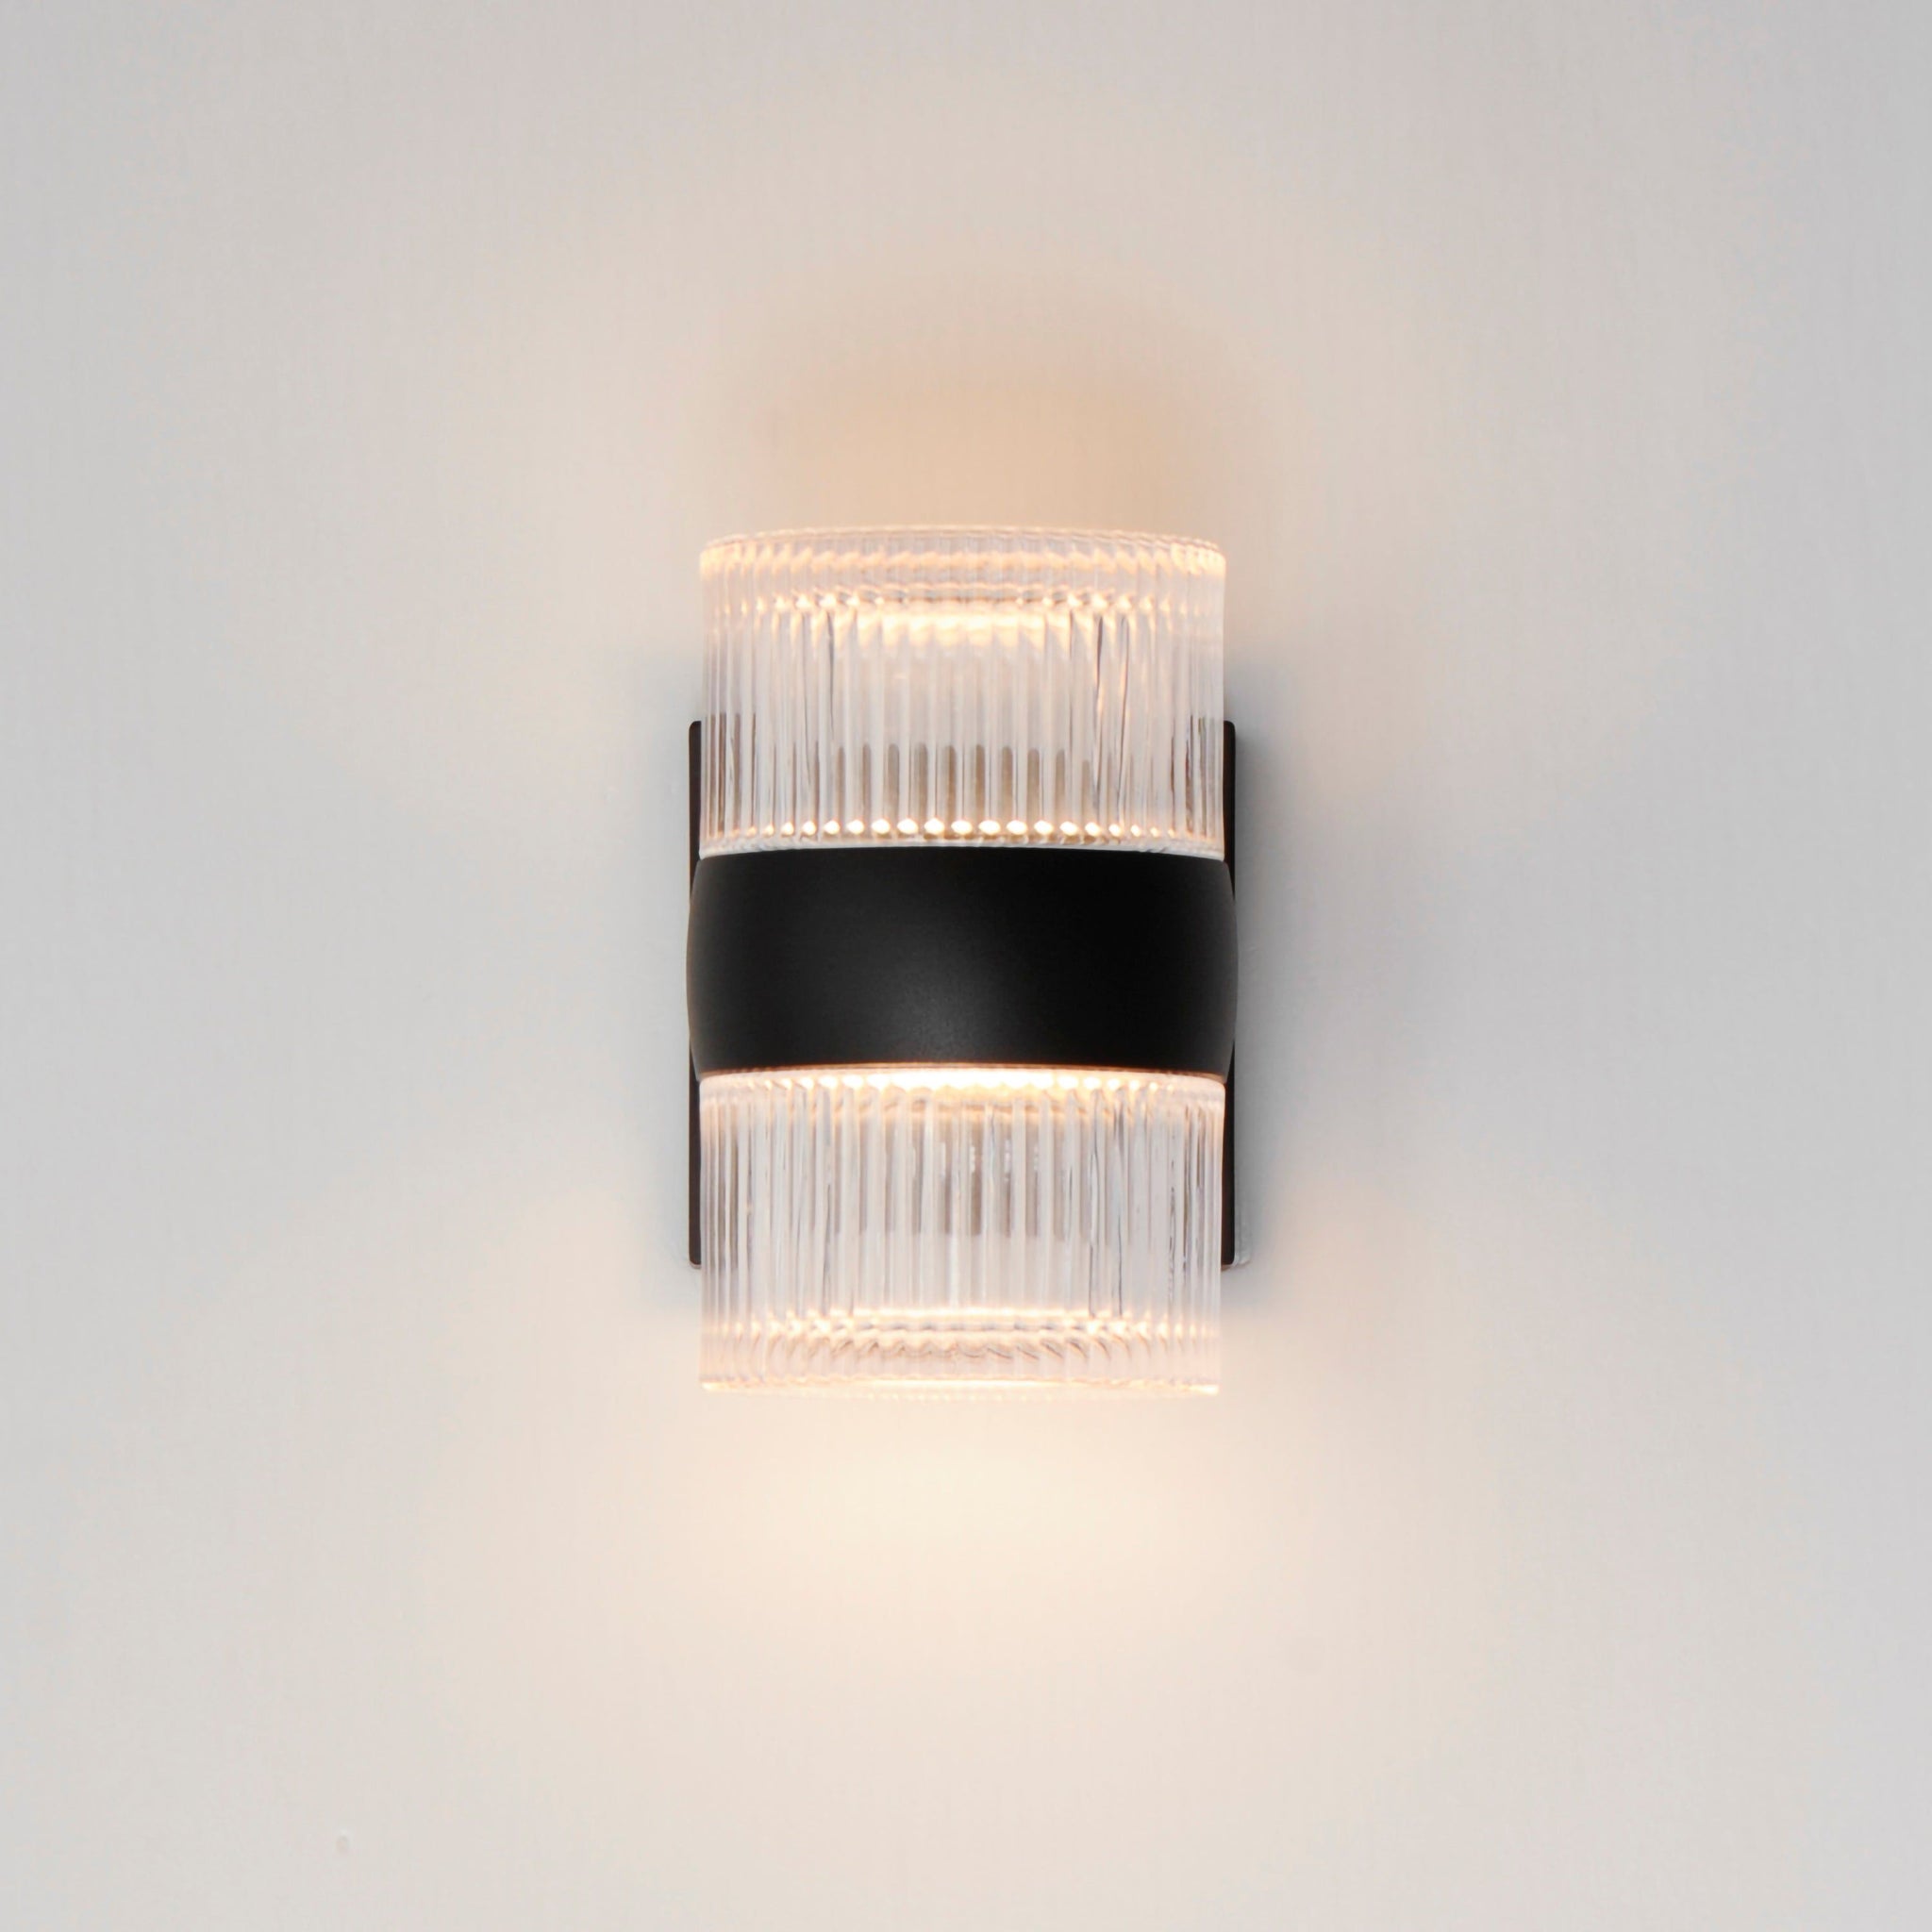 Modular 2-Light LED Outdoor Sconce